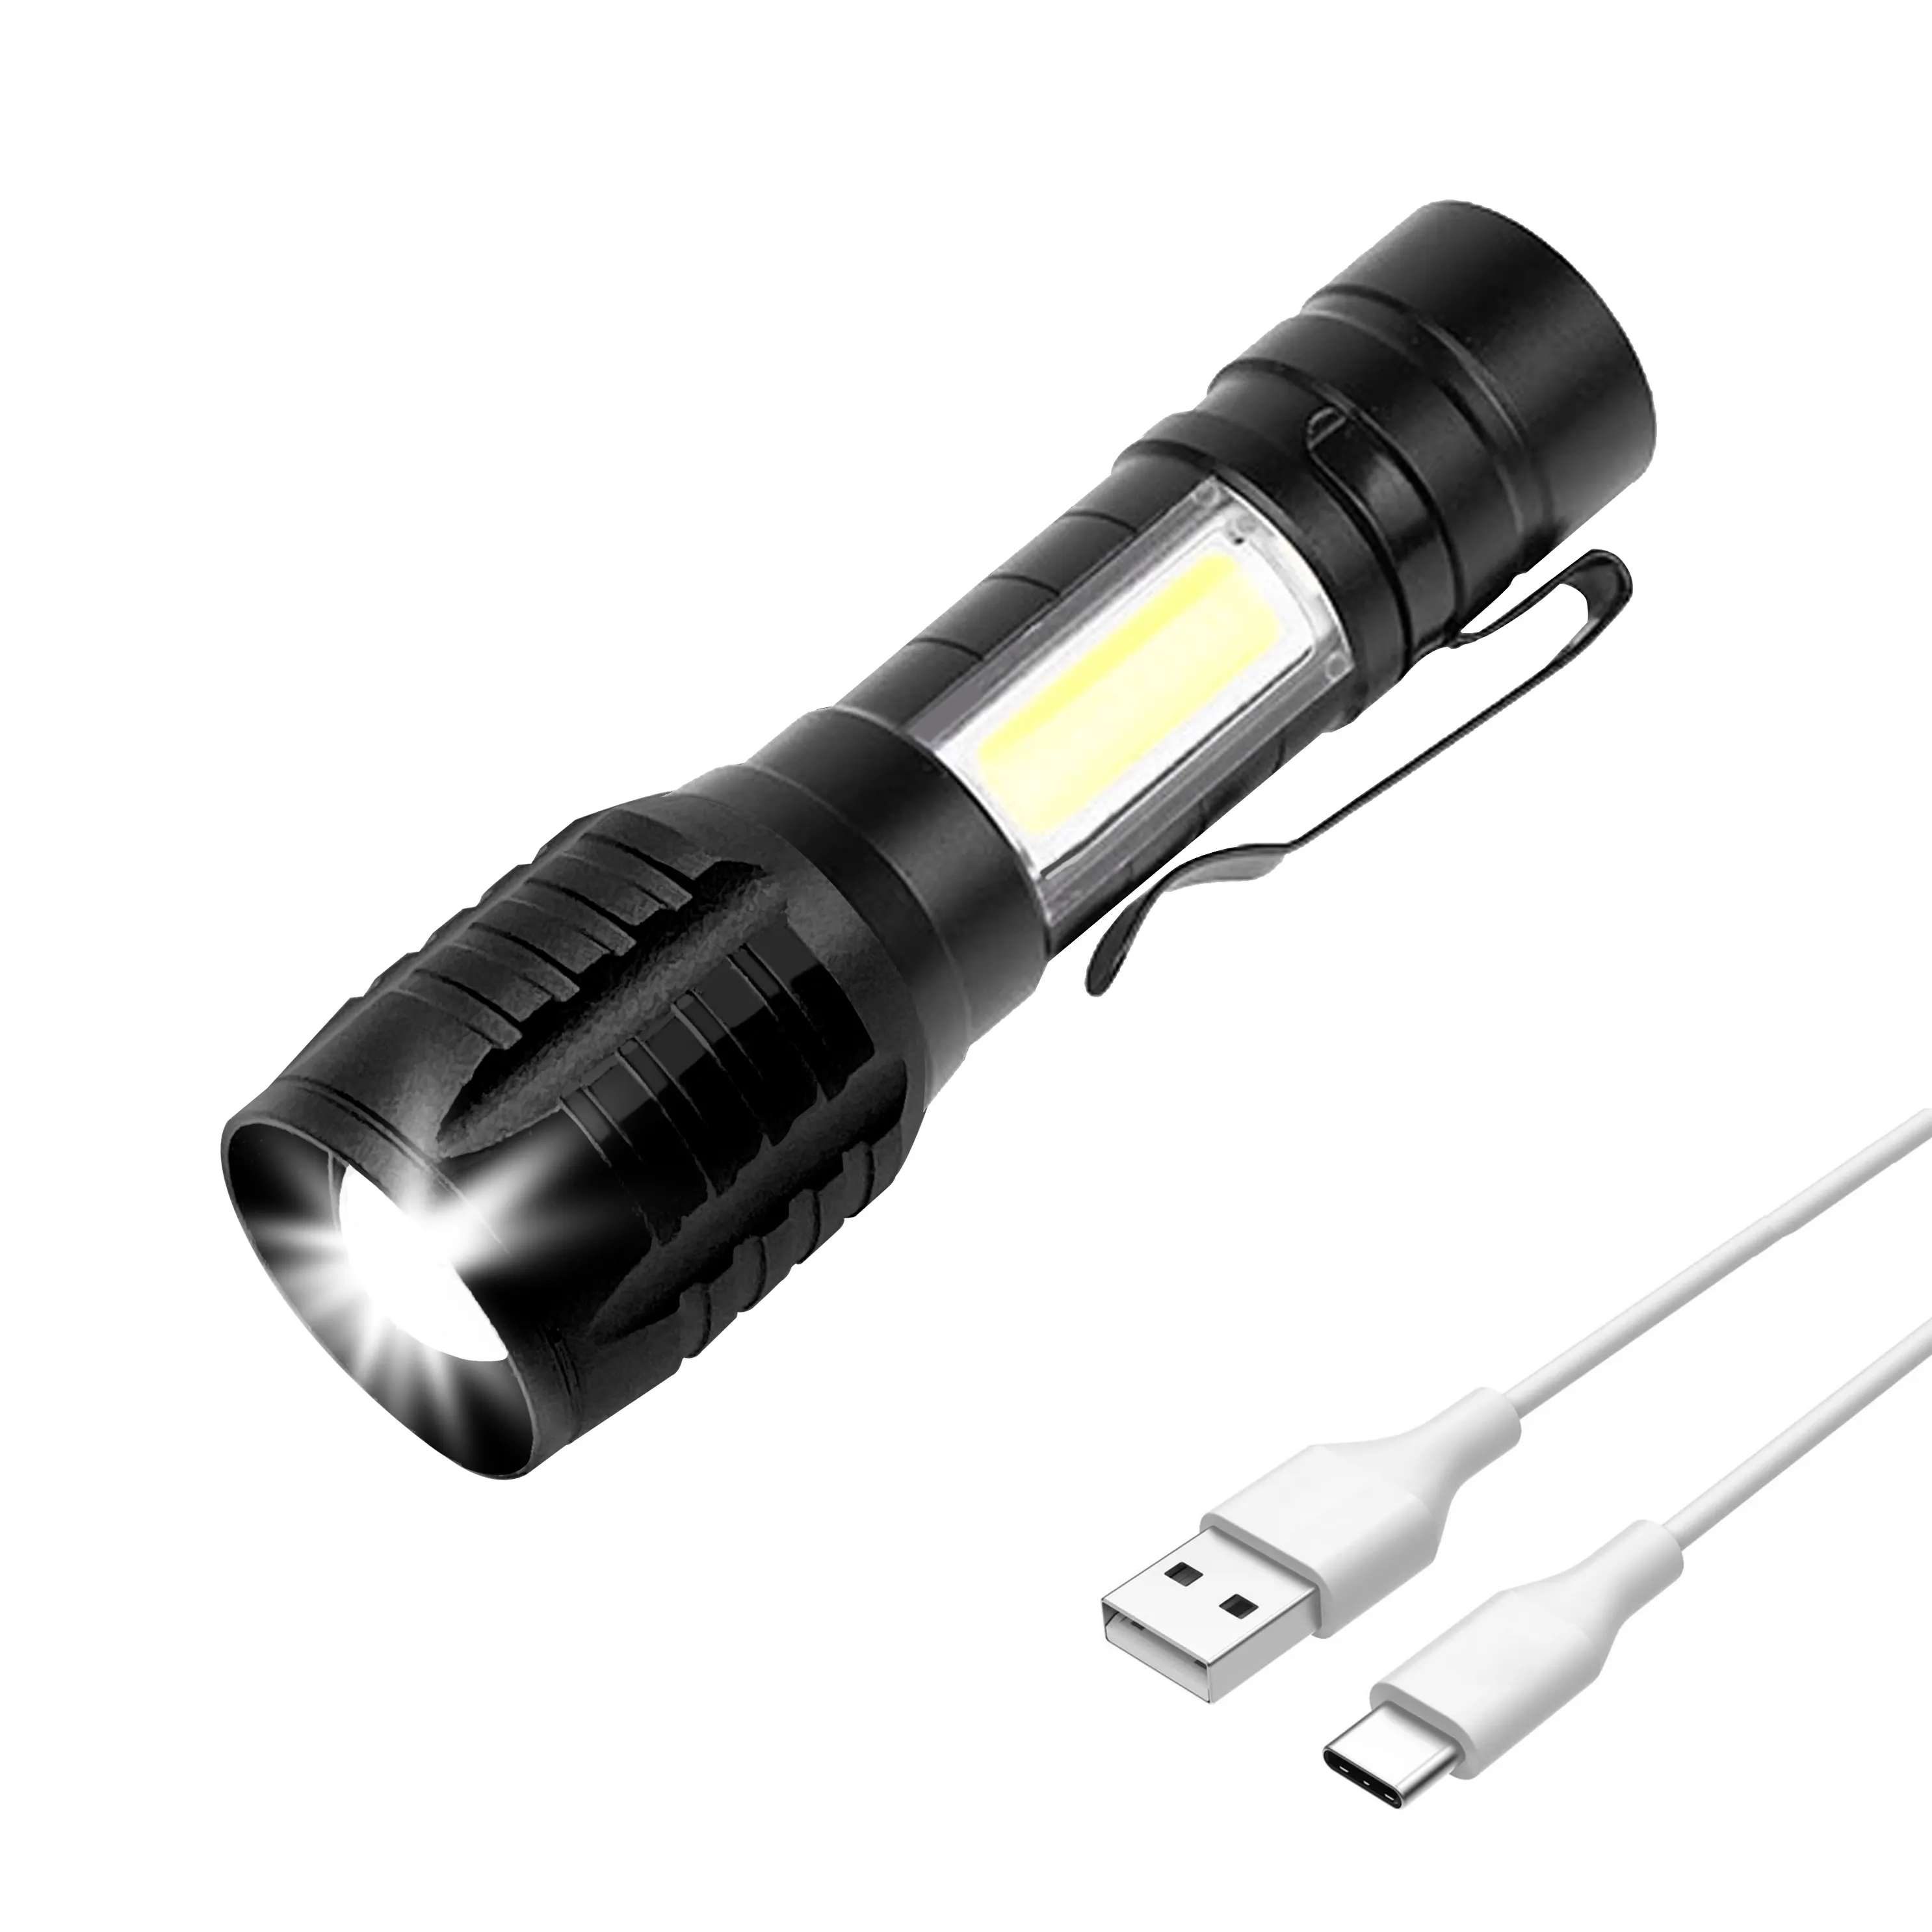 In magazzino In italia, Mini torcia a LED torcia Zoomable Pocket Clip Gear per l'escursionismo ricarica USB luce laterale Ultra luminosa Carry Outdoor Camping 50000